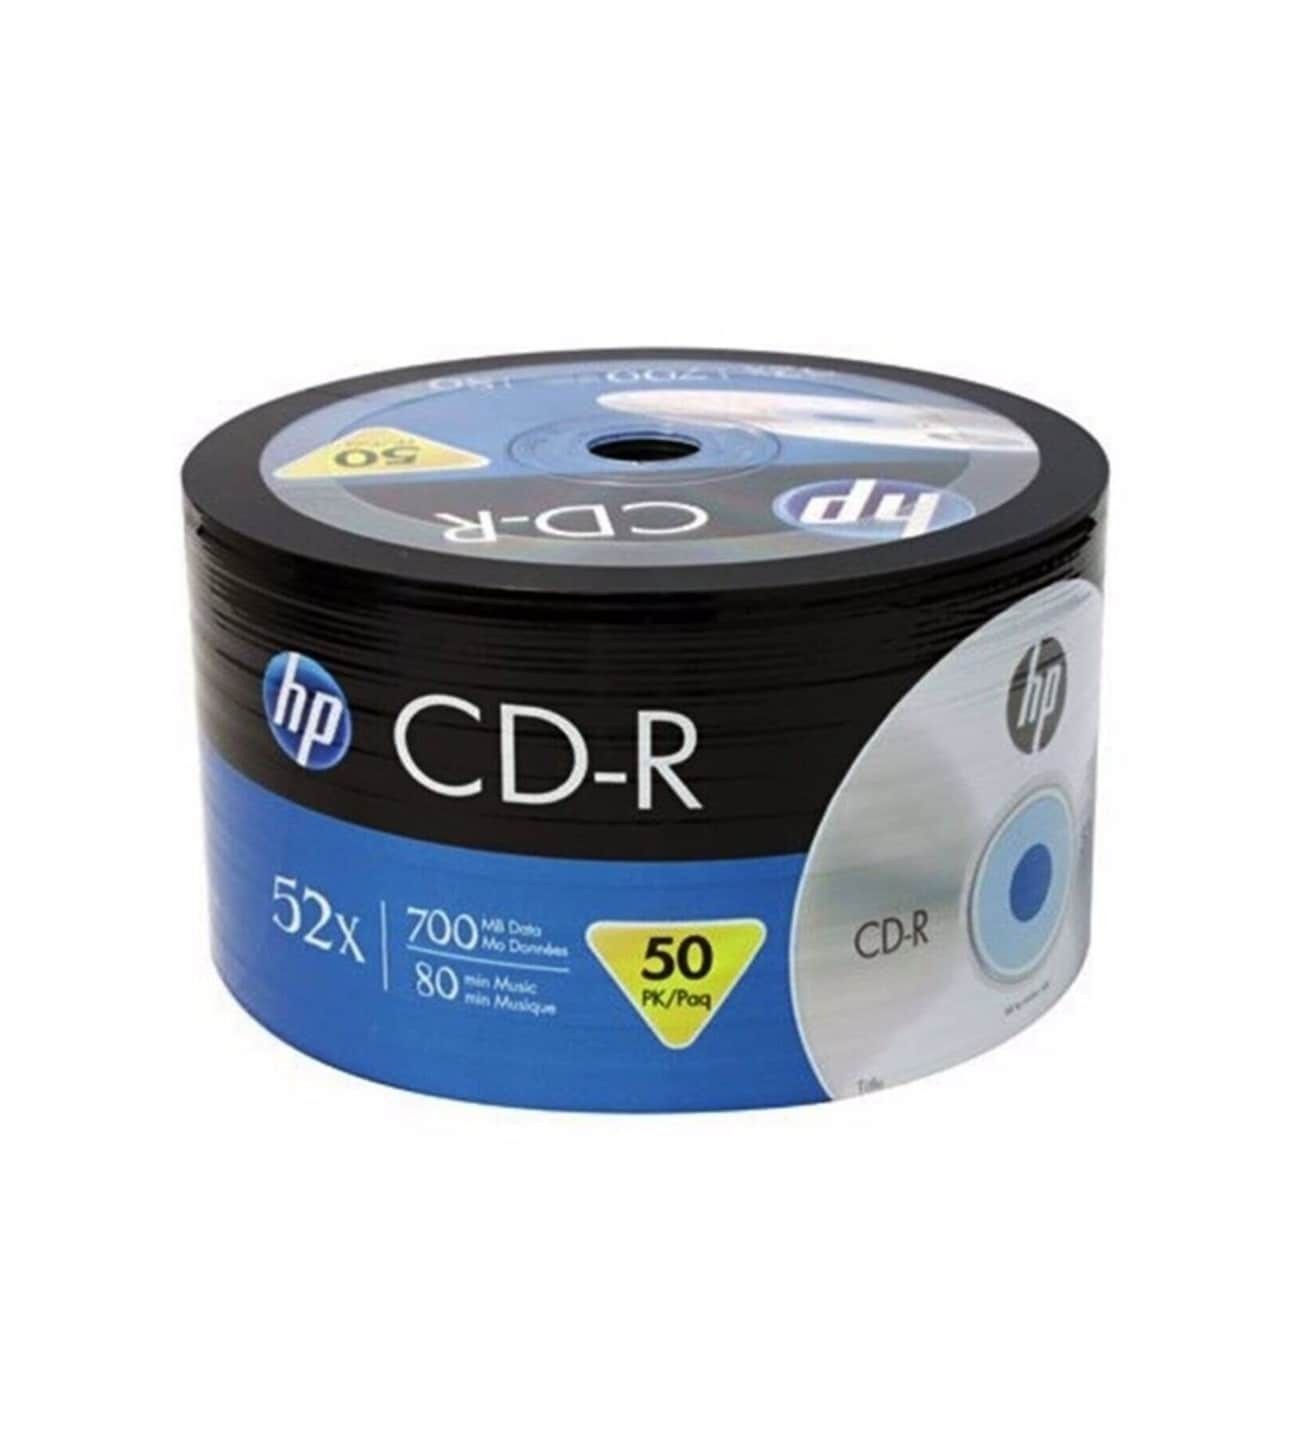 HP 52x CD-R 700 Mb (50 lik Paket)